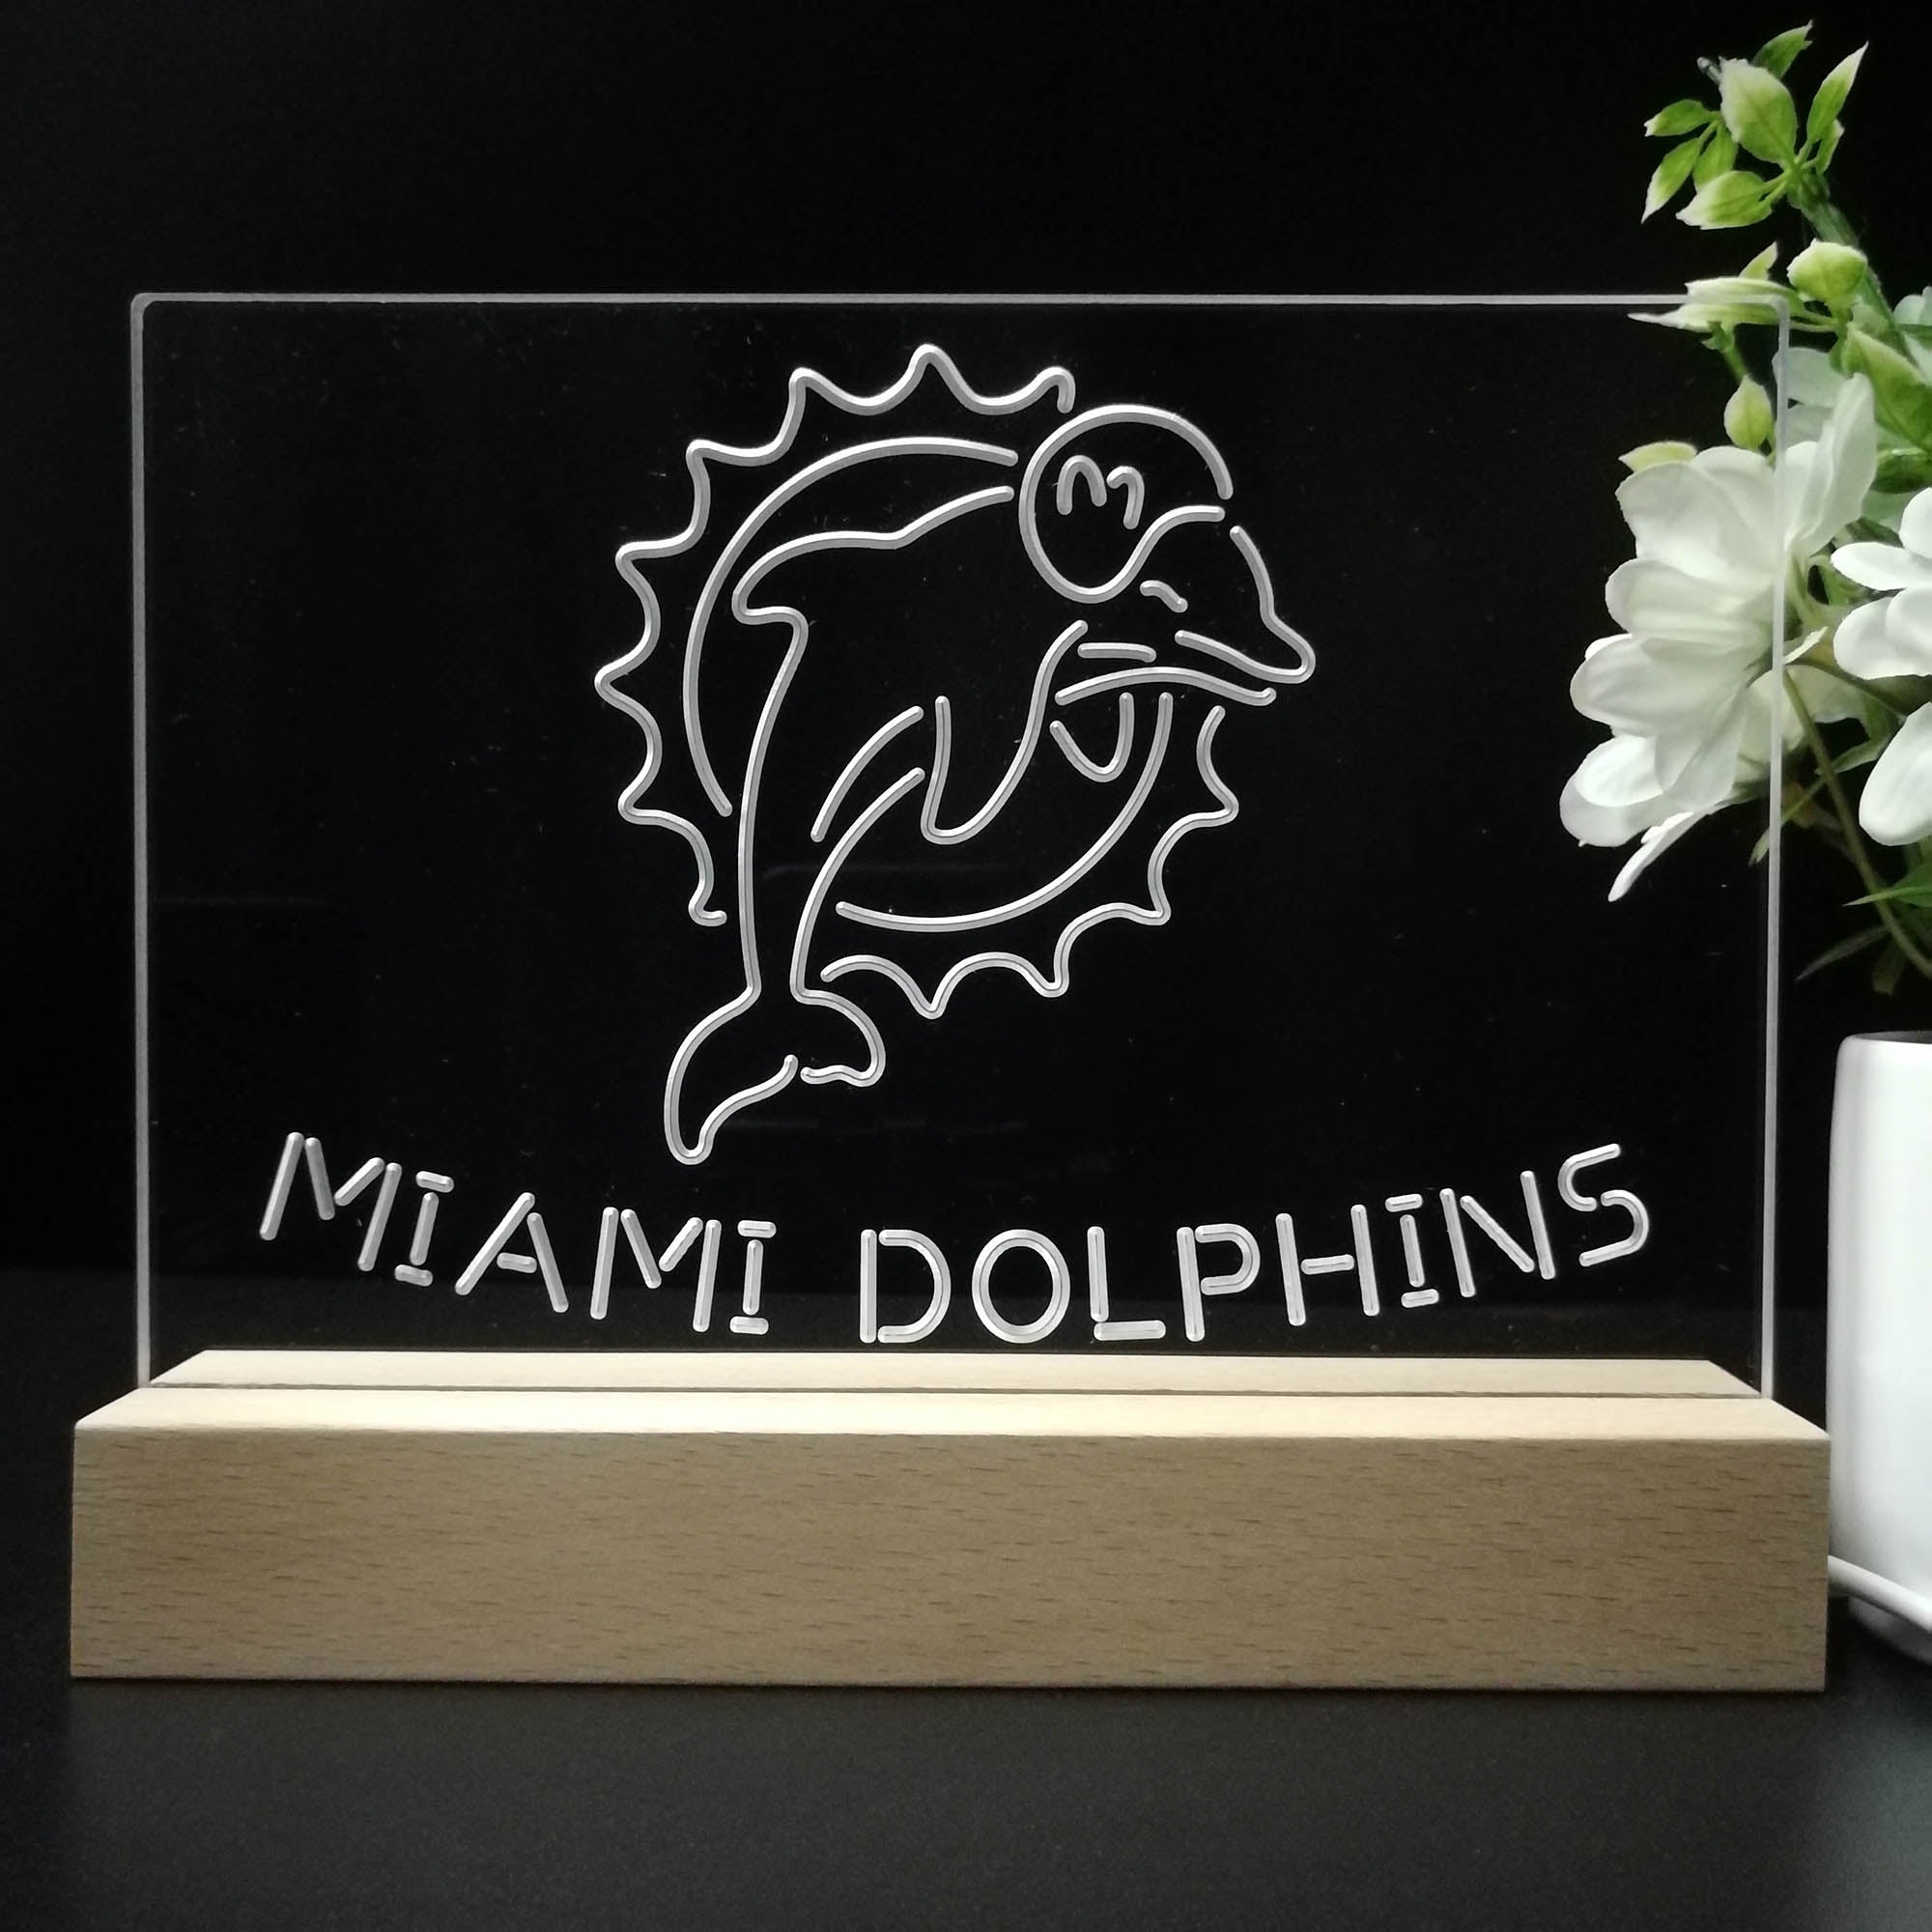 Miami Dolphins Neon Sign Pub Bar Lamp